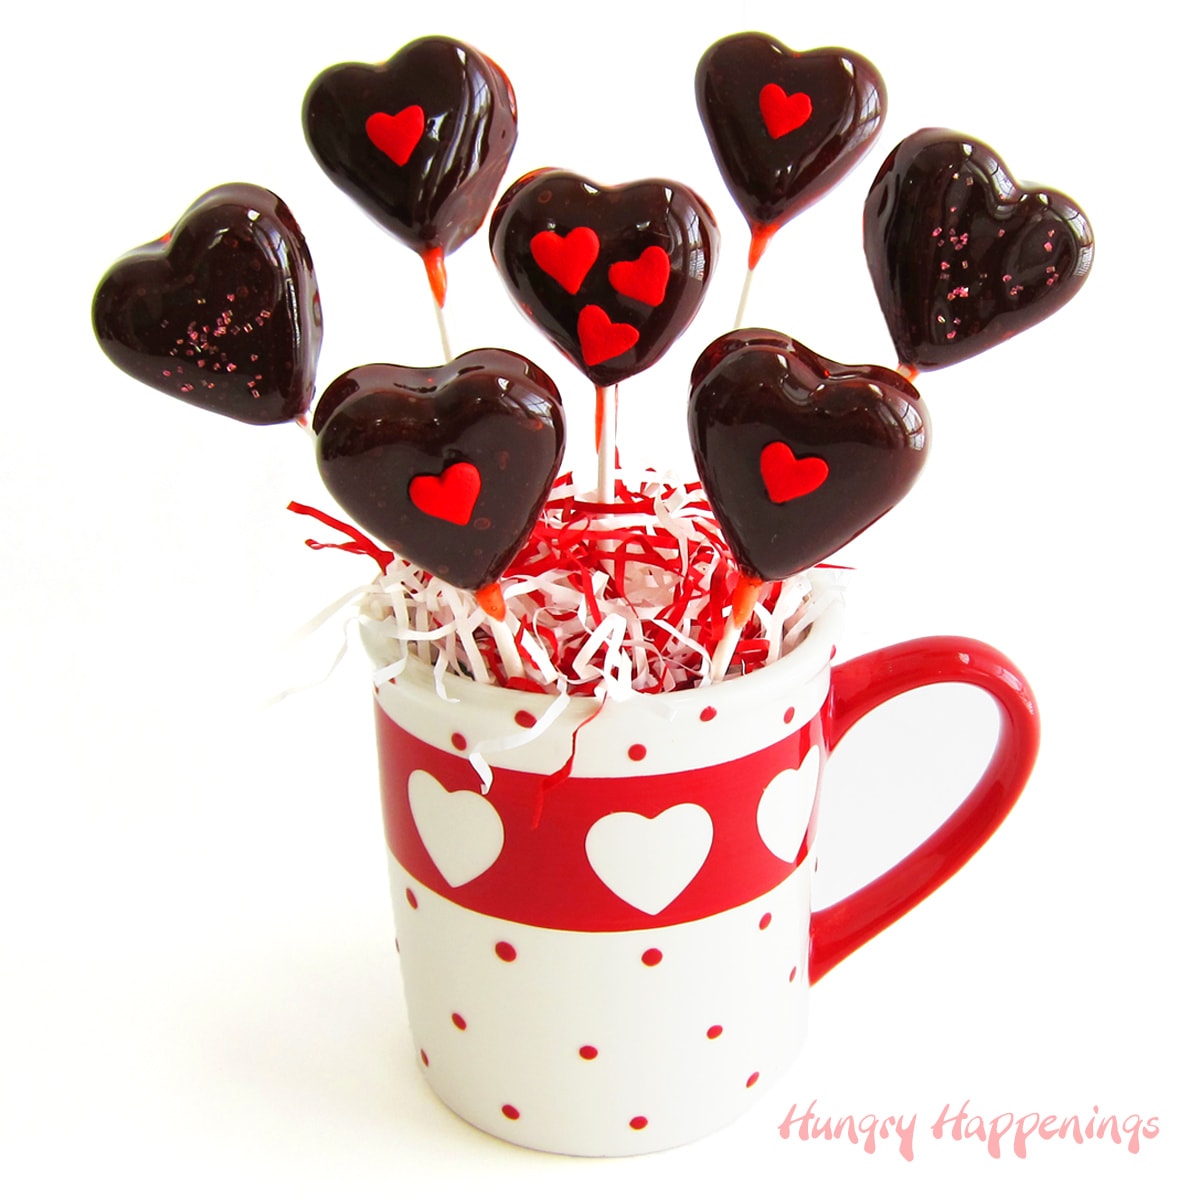 Happy Birthday Angela Mini Heart Tin Gift Present For Angela WIth Chocolates